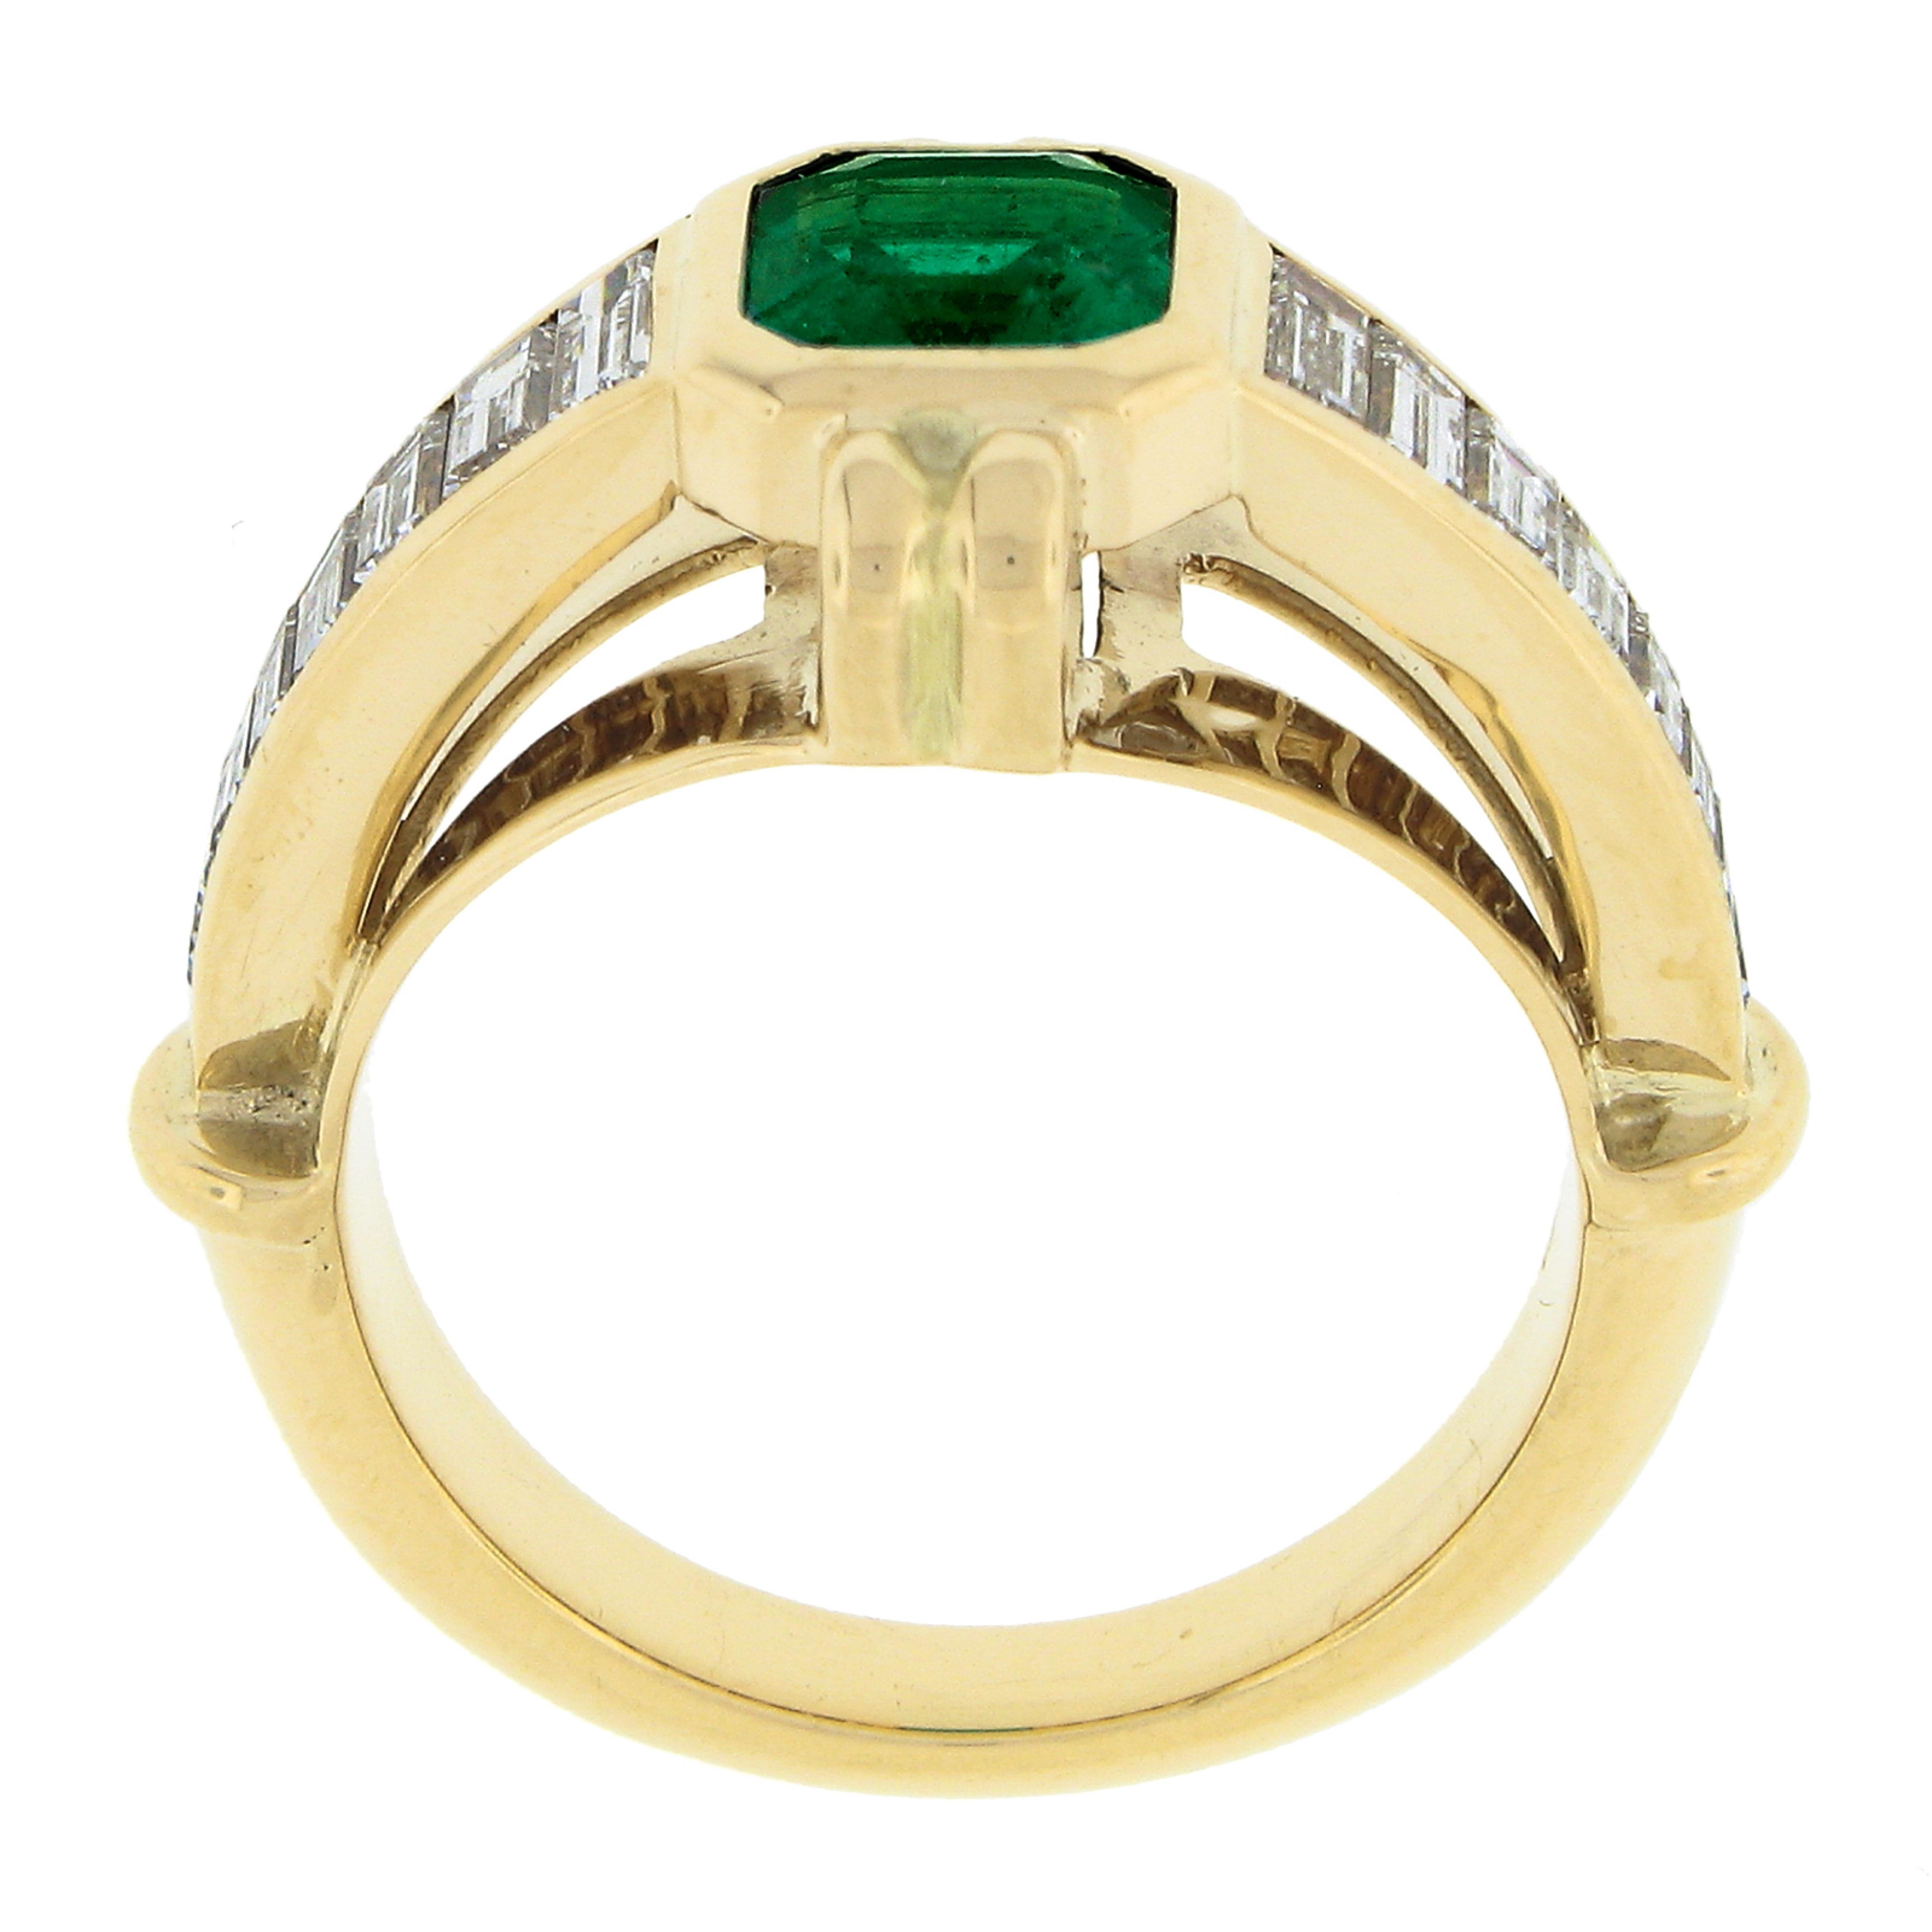 Vintage Chaumet 18k Gold 2.51ct GIA Emerald Cut & Baguette Diamond Cocktail Ring 2